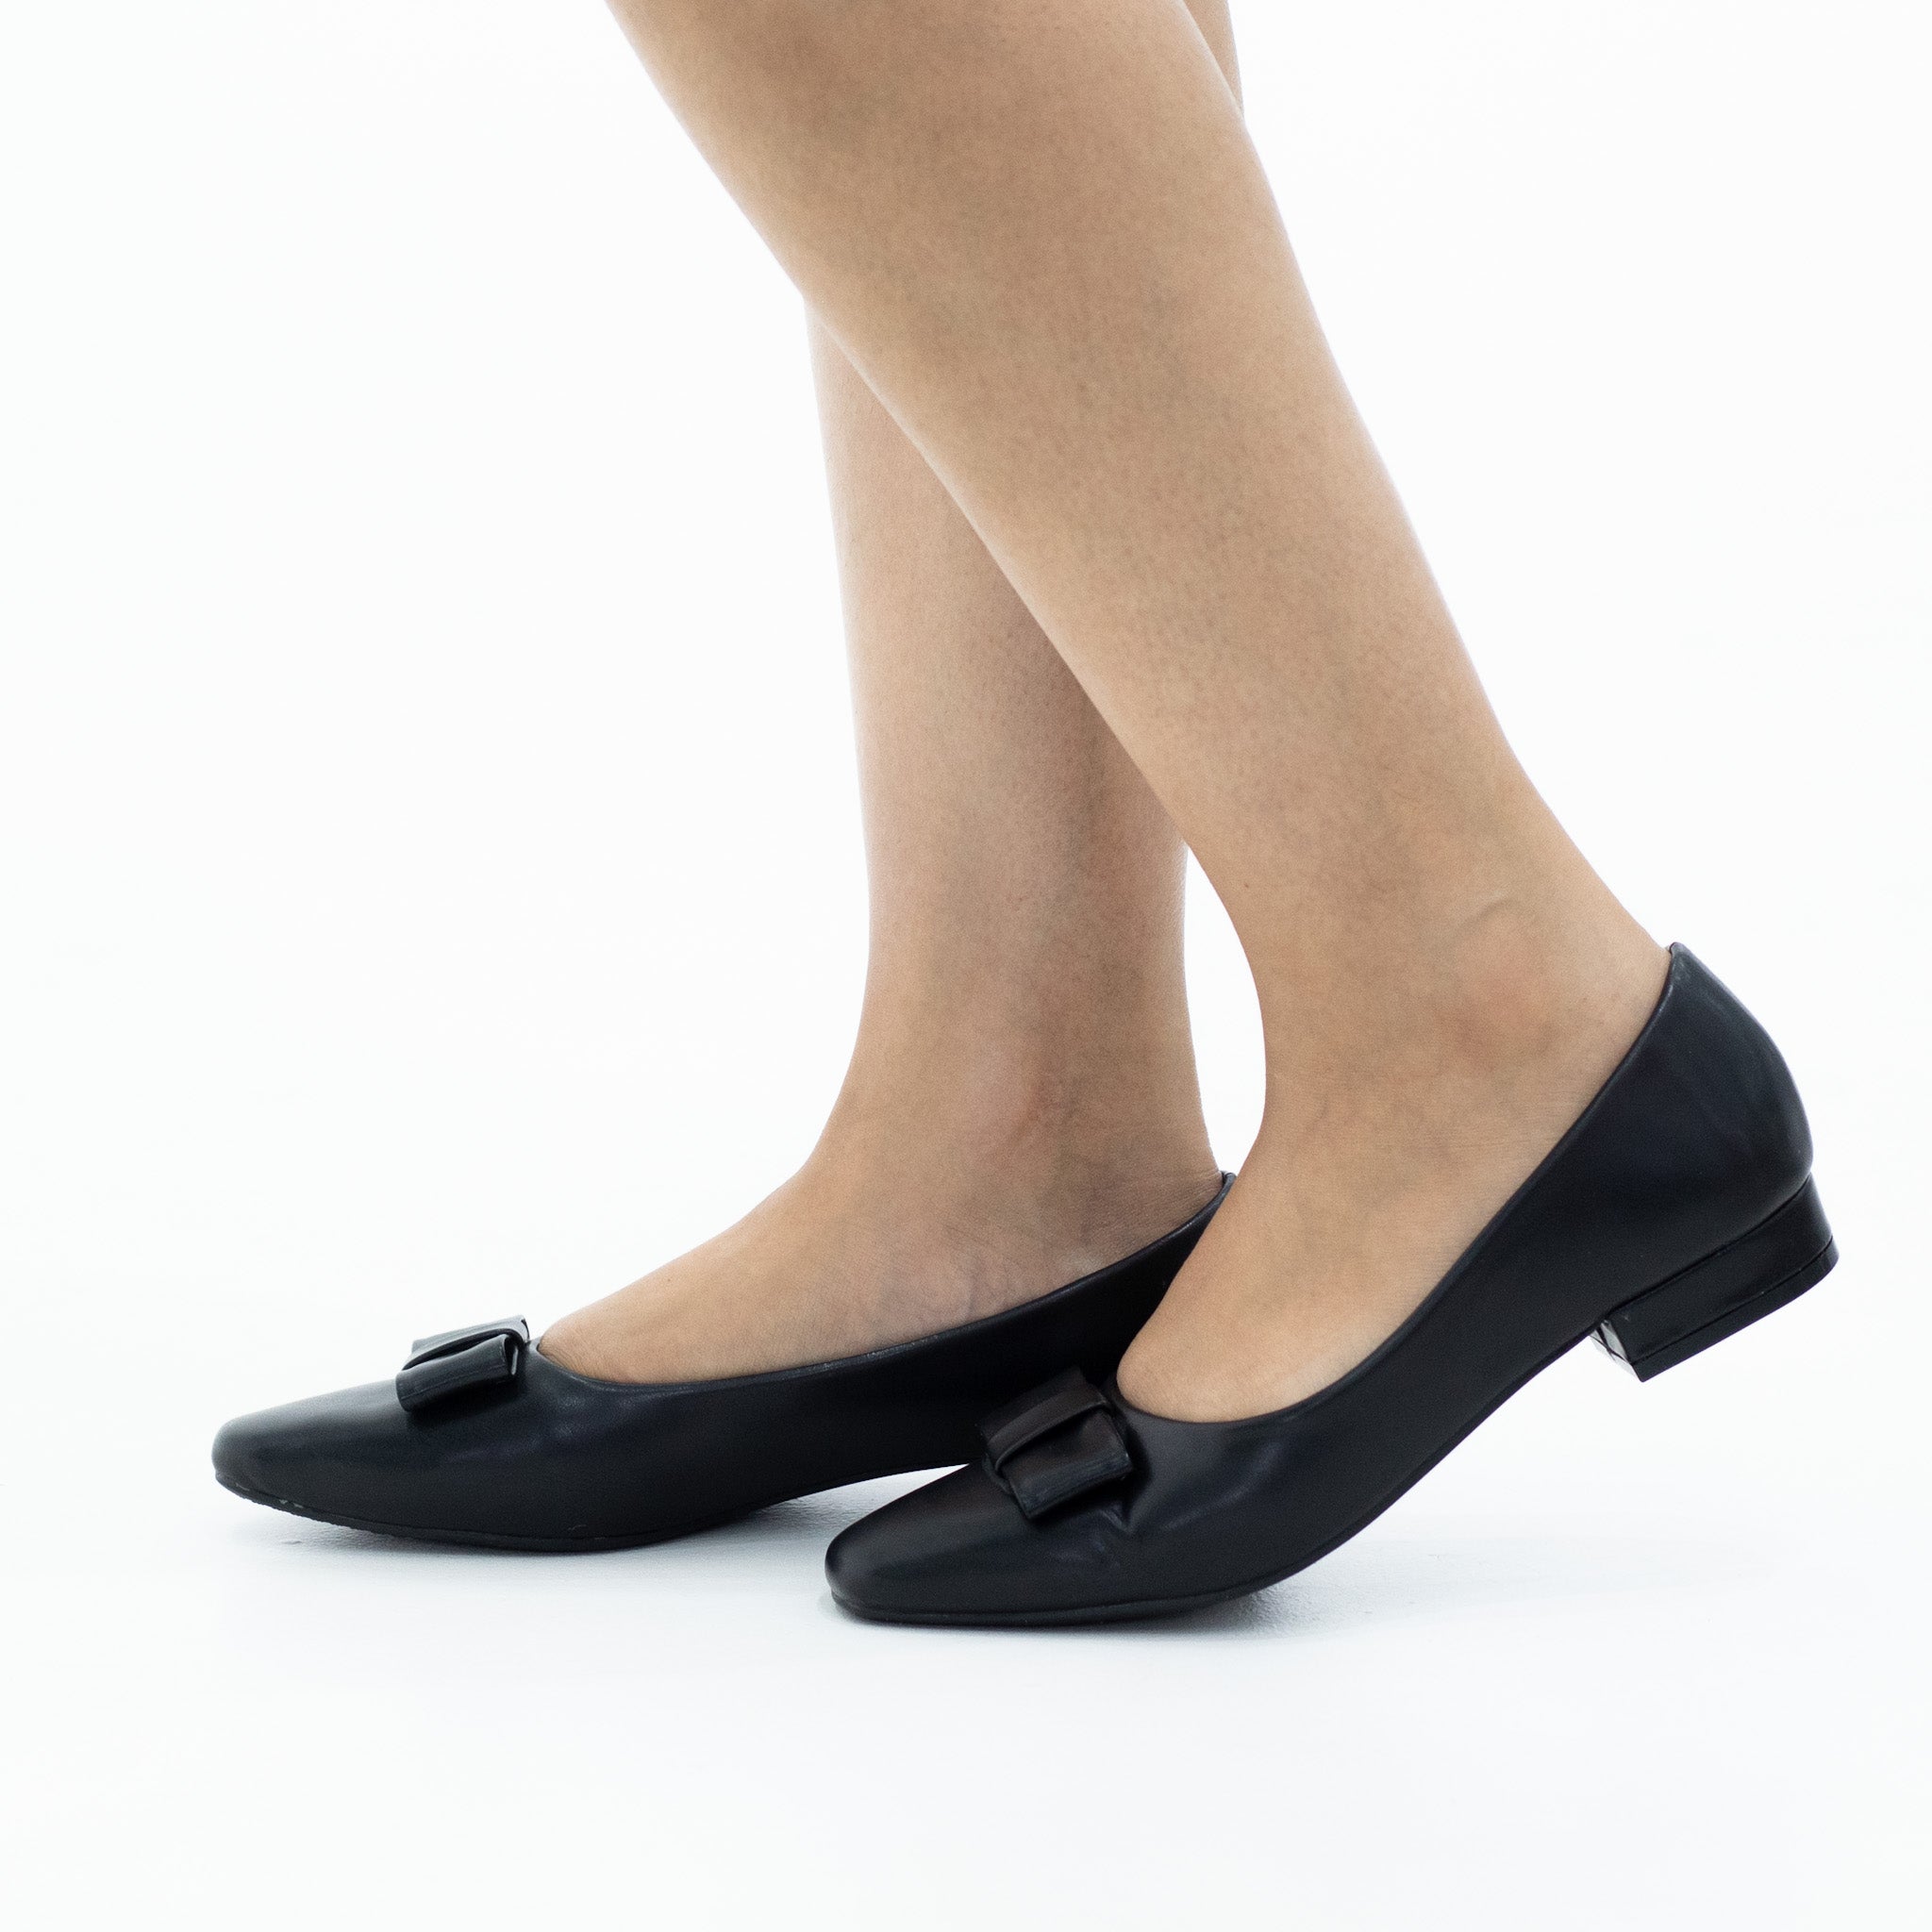 Black comfort 2cm low heel court shoe with a bow aquarius